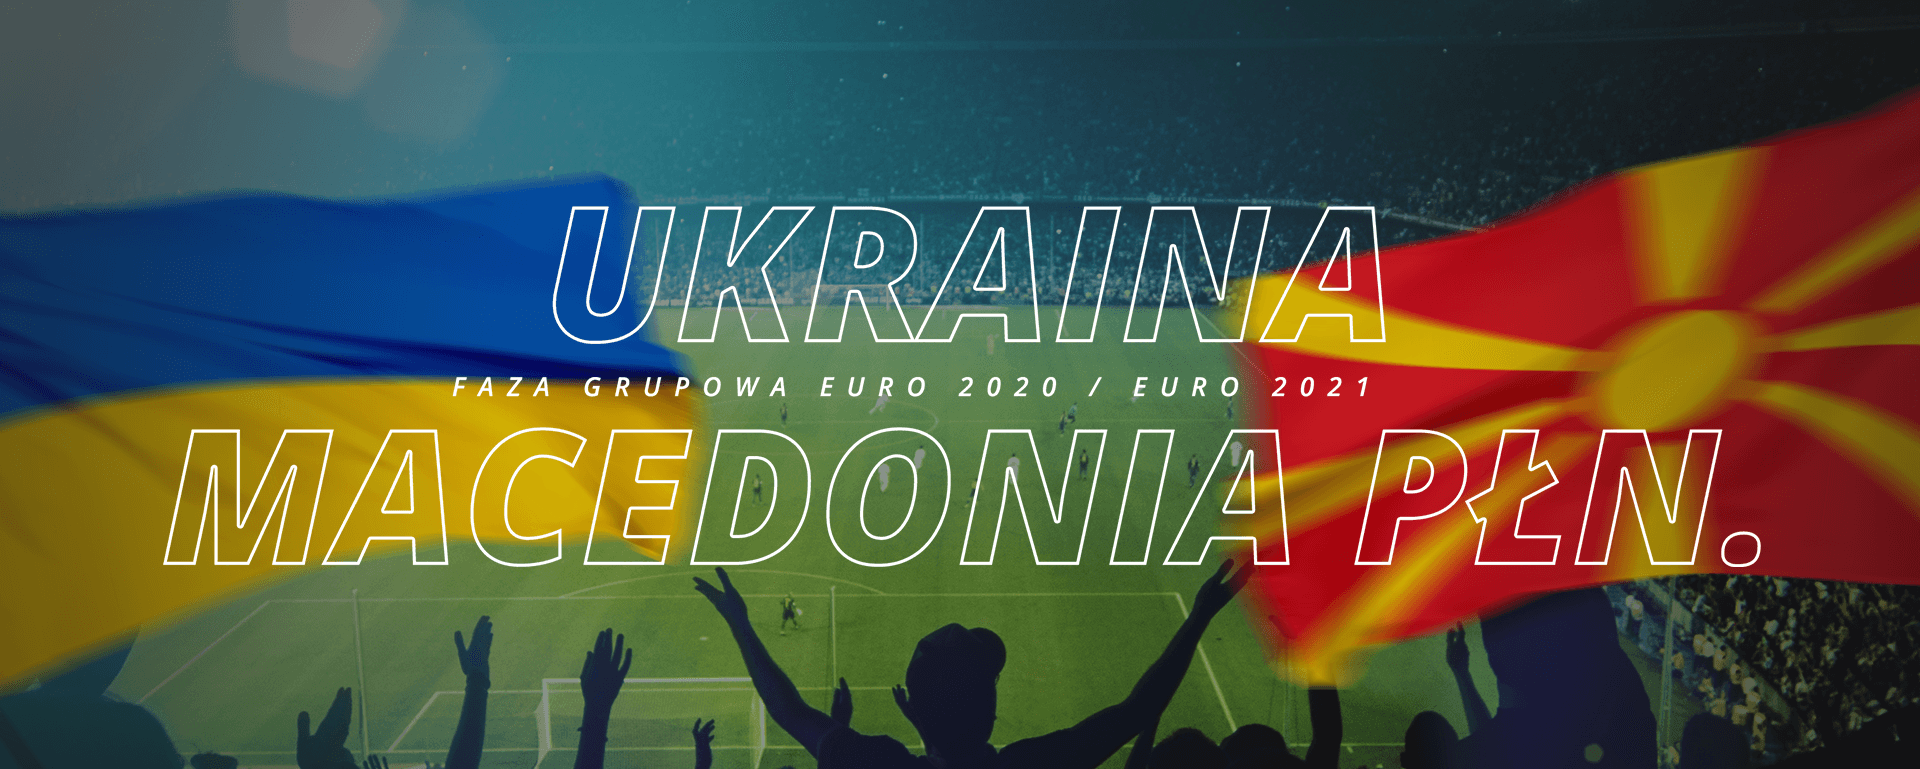 Ukraina – Macedonia Płn. | faza grupowa Euro 2020 / Euro 2021